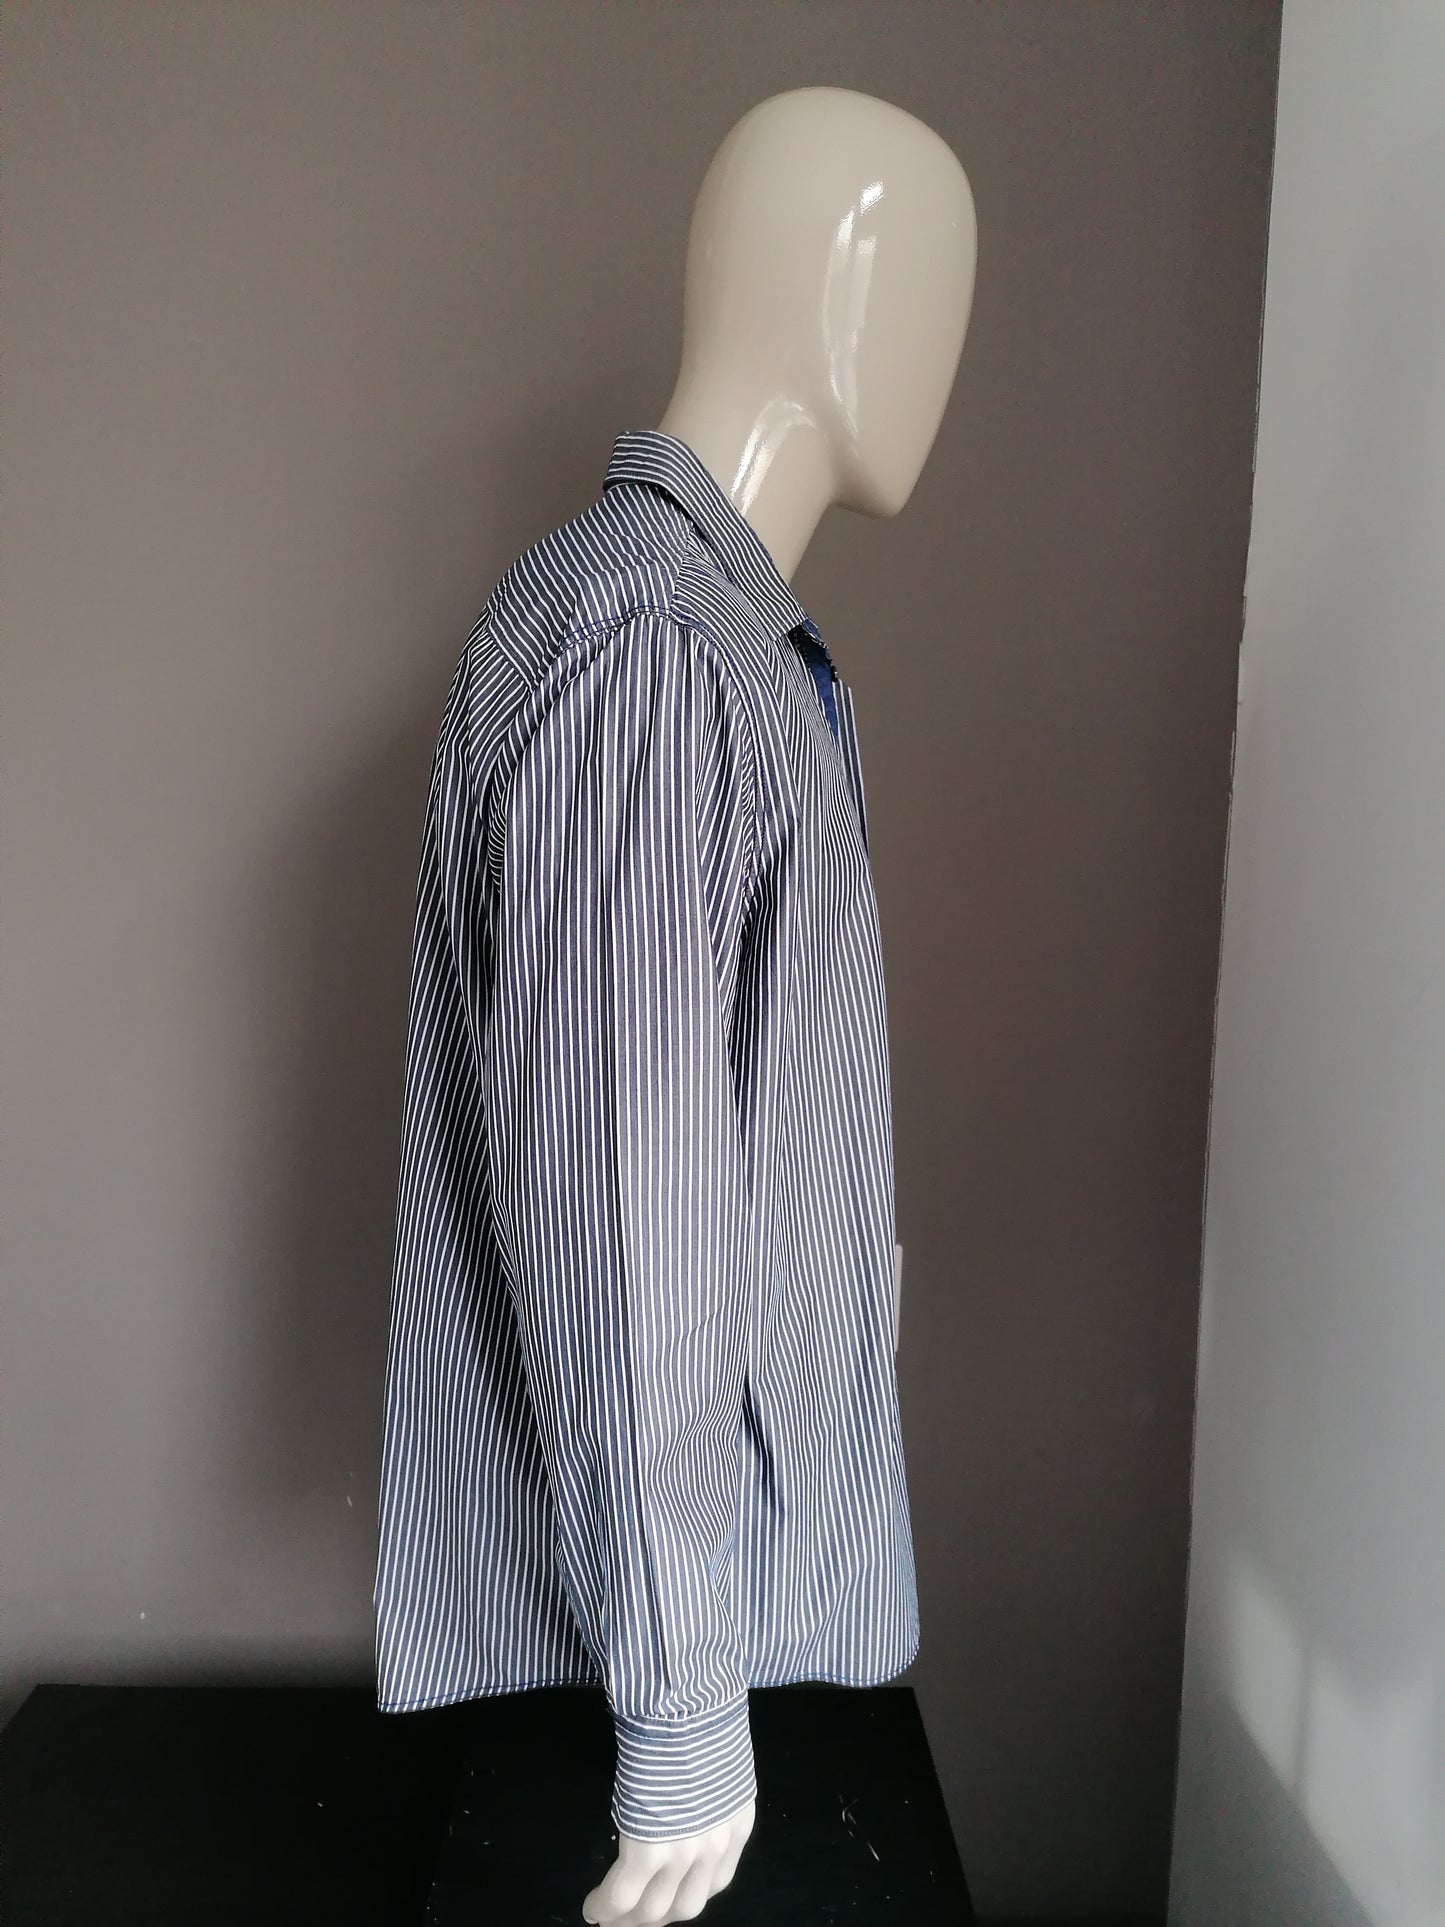 Haupt Shirt. Blanco azul rayado. Tamaño 45/46 / XXL. Ajuste moderno.